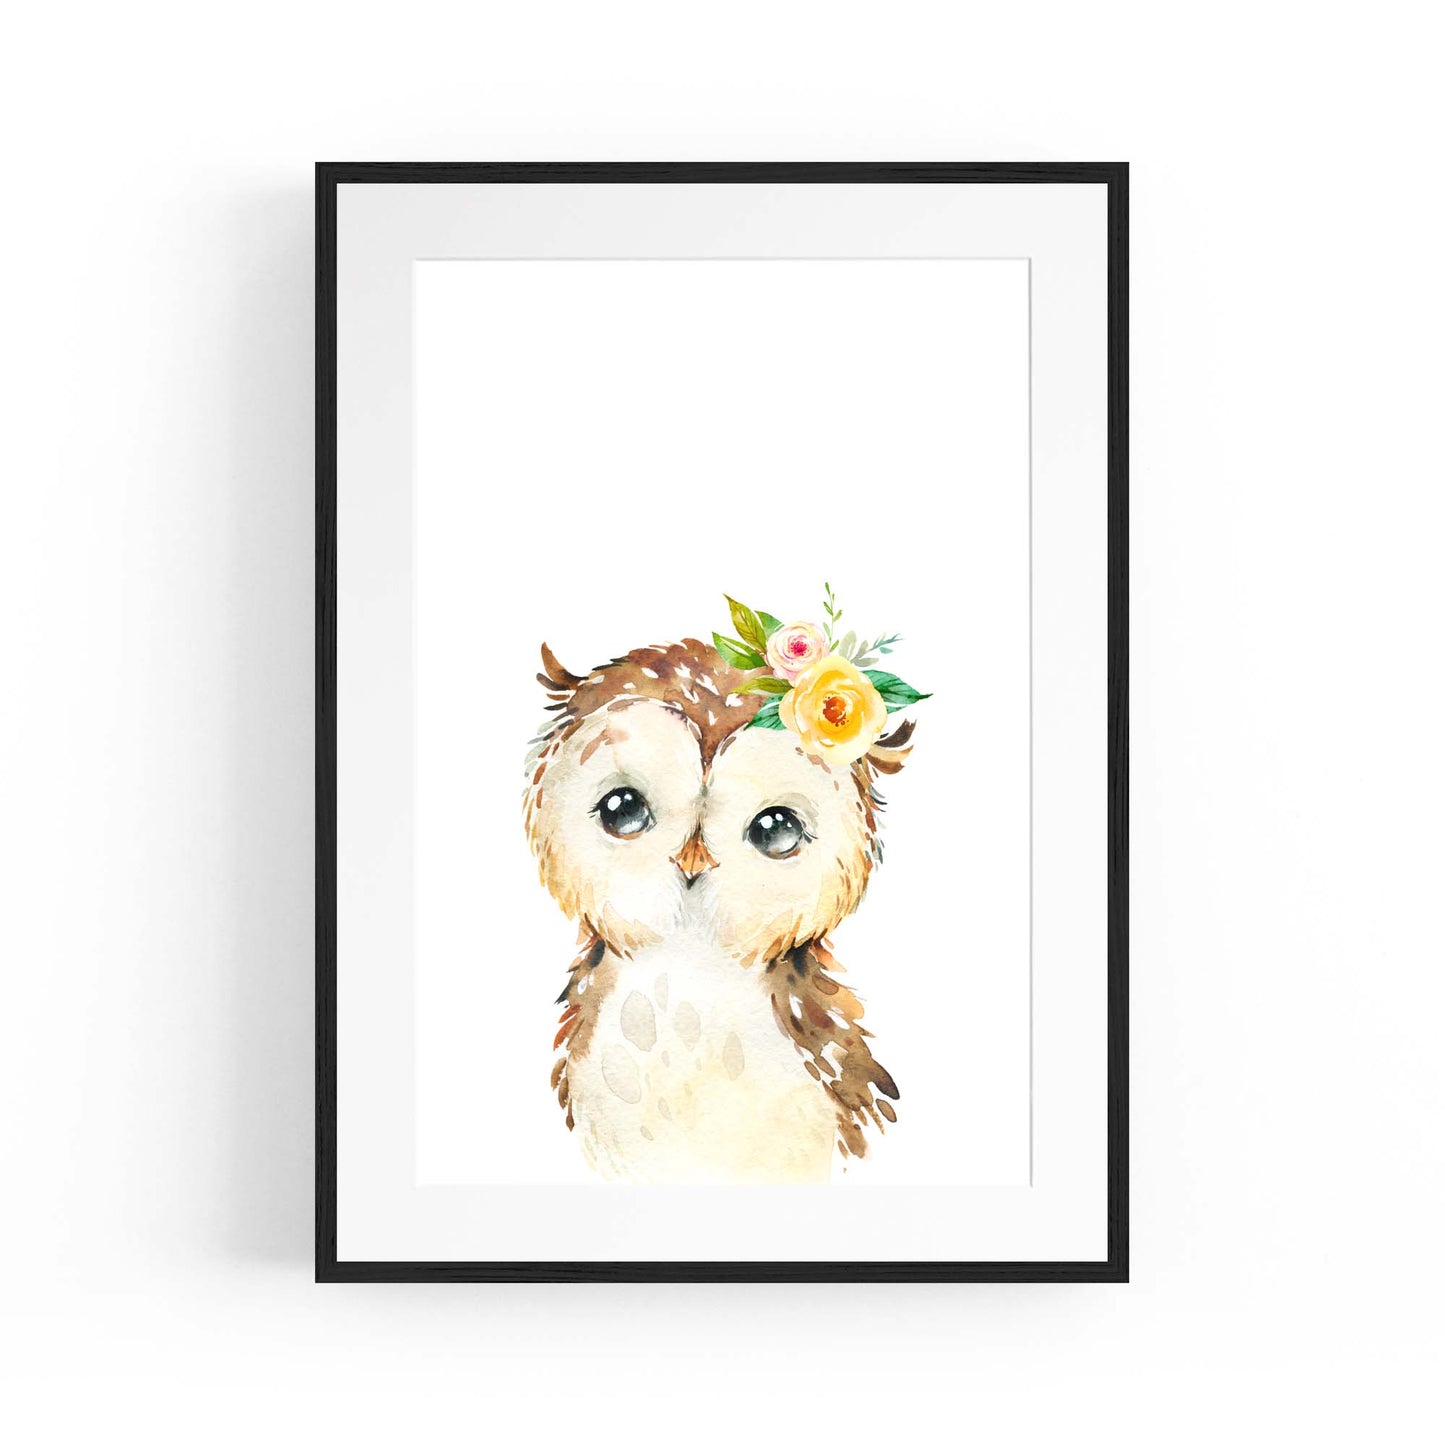 Cute Baby Owl Nursery Animal Gift Wall Art - The Affordable Art Company